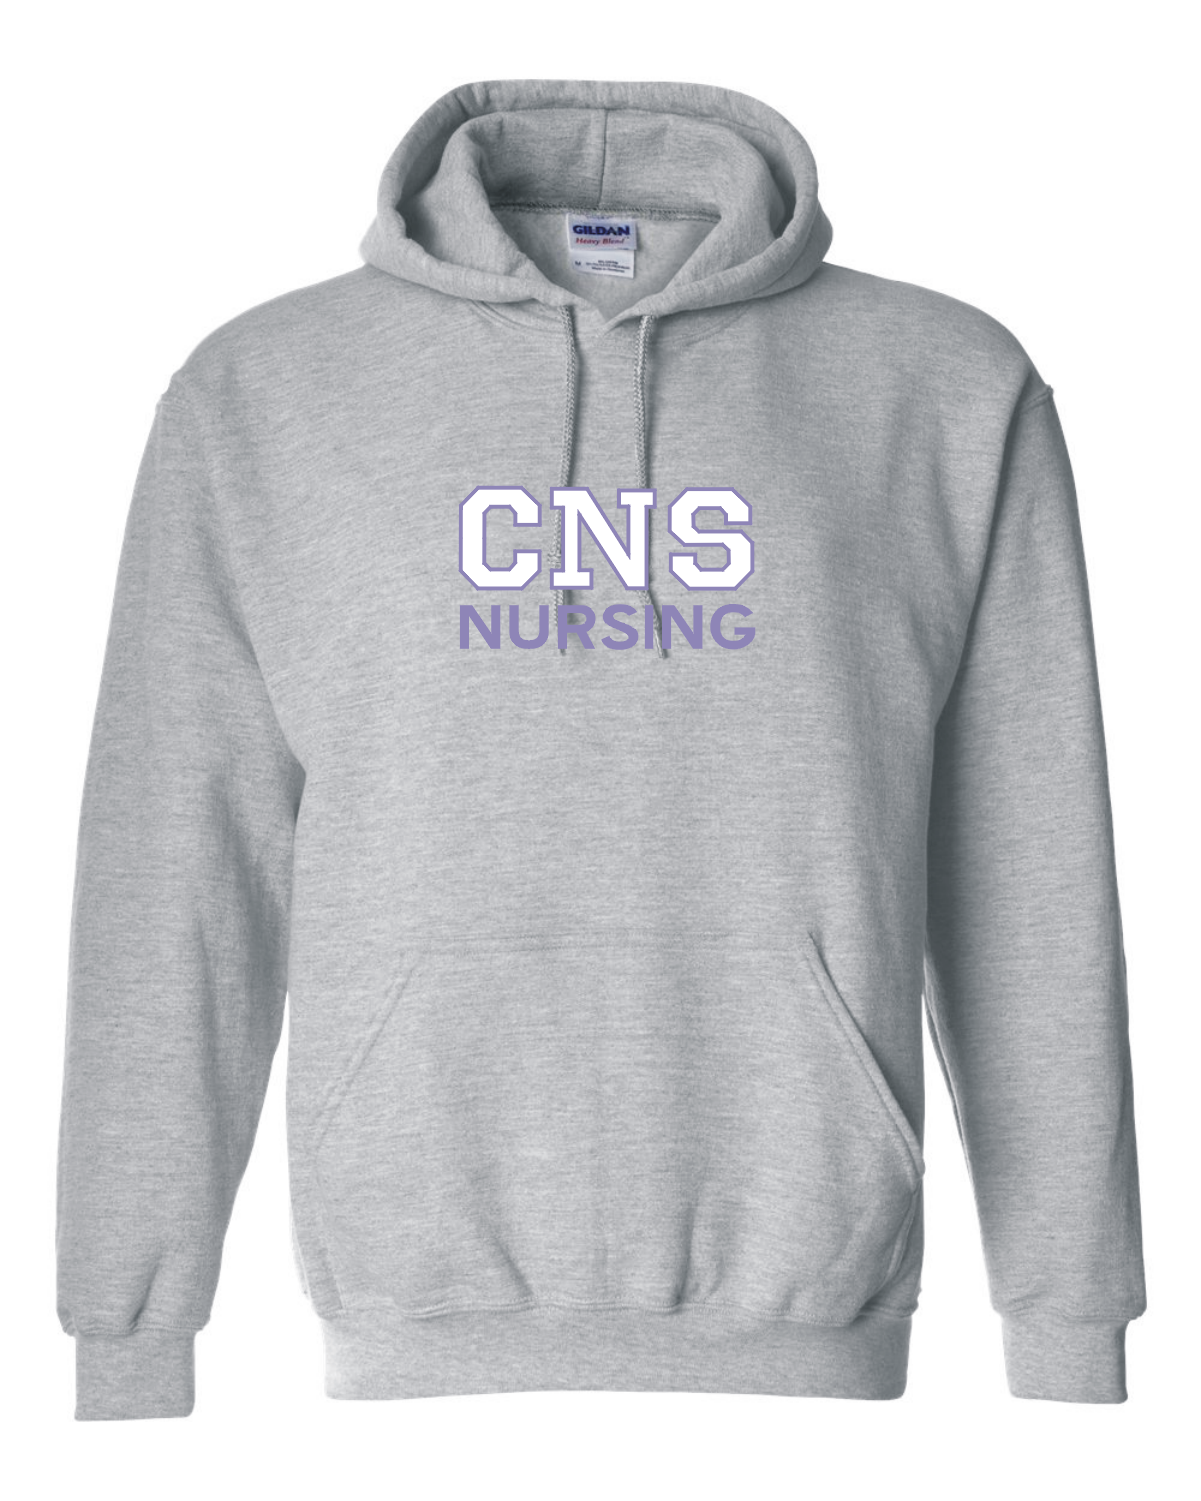 CNS - Class of 2024 - Nursing Pullover Hoody